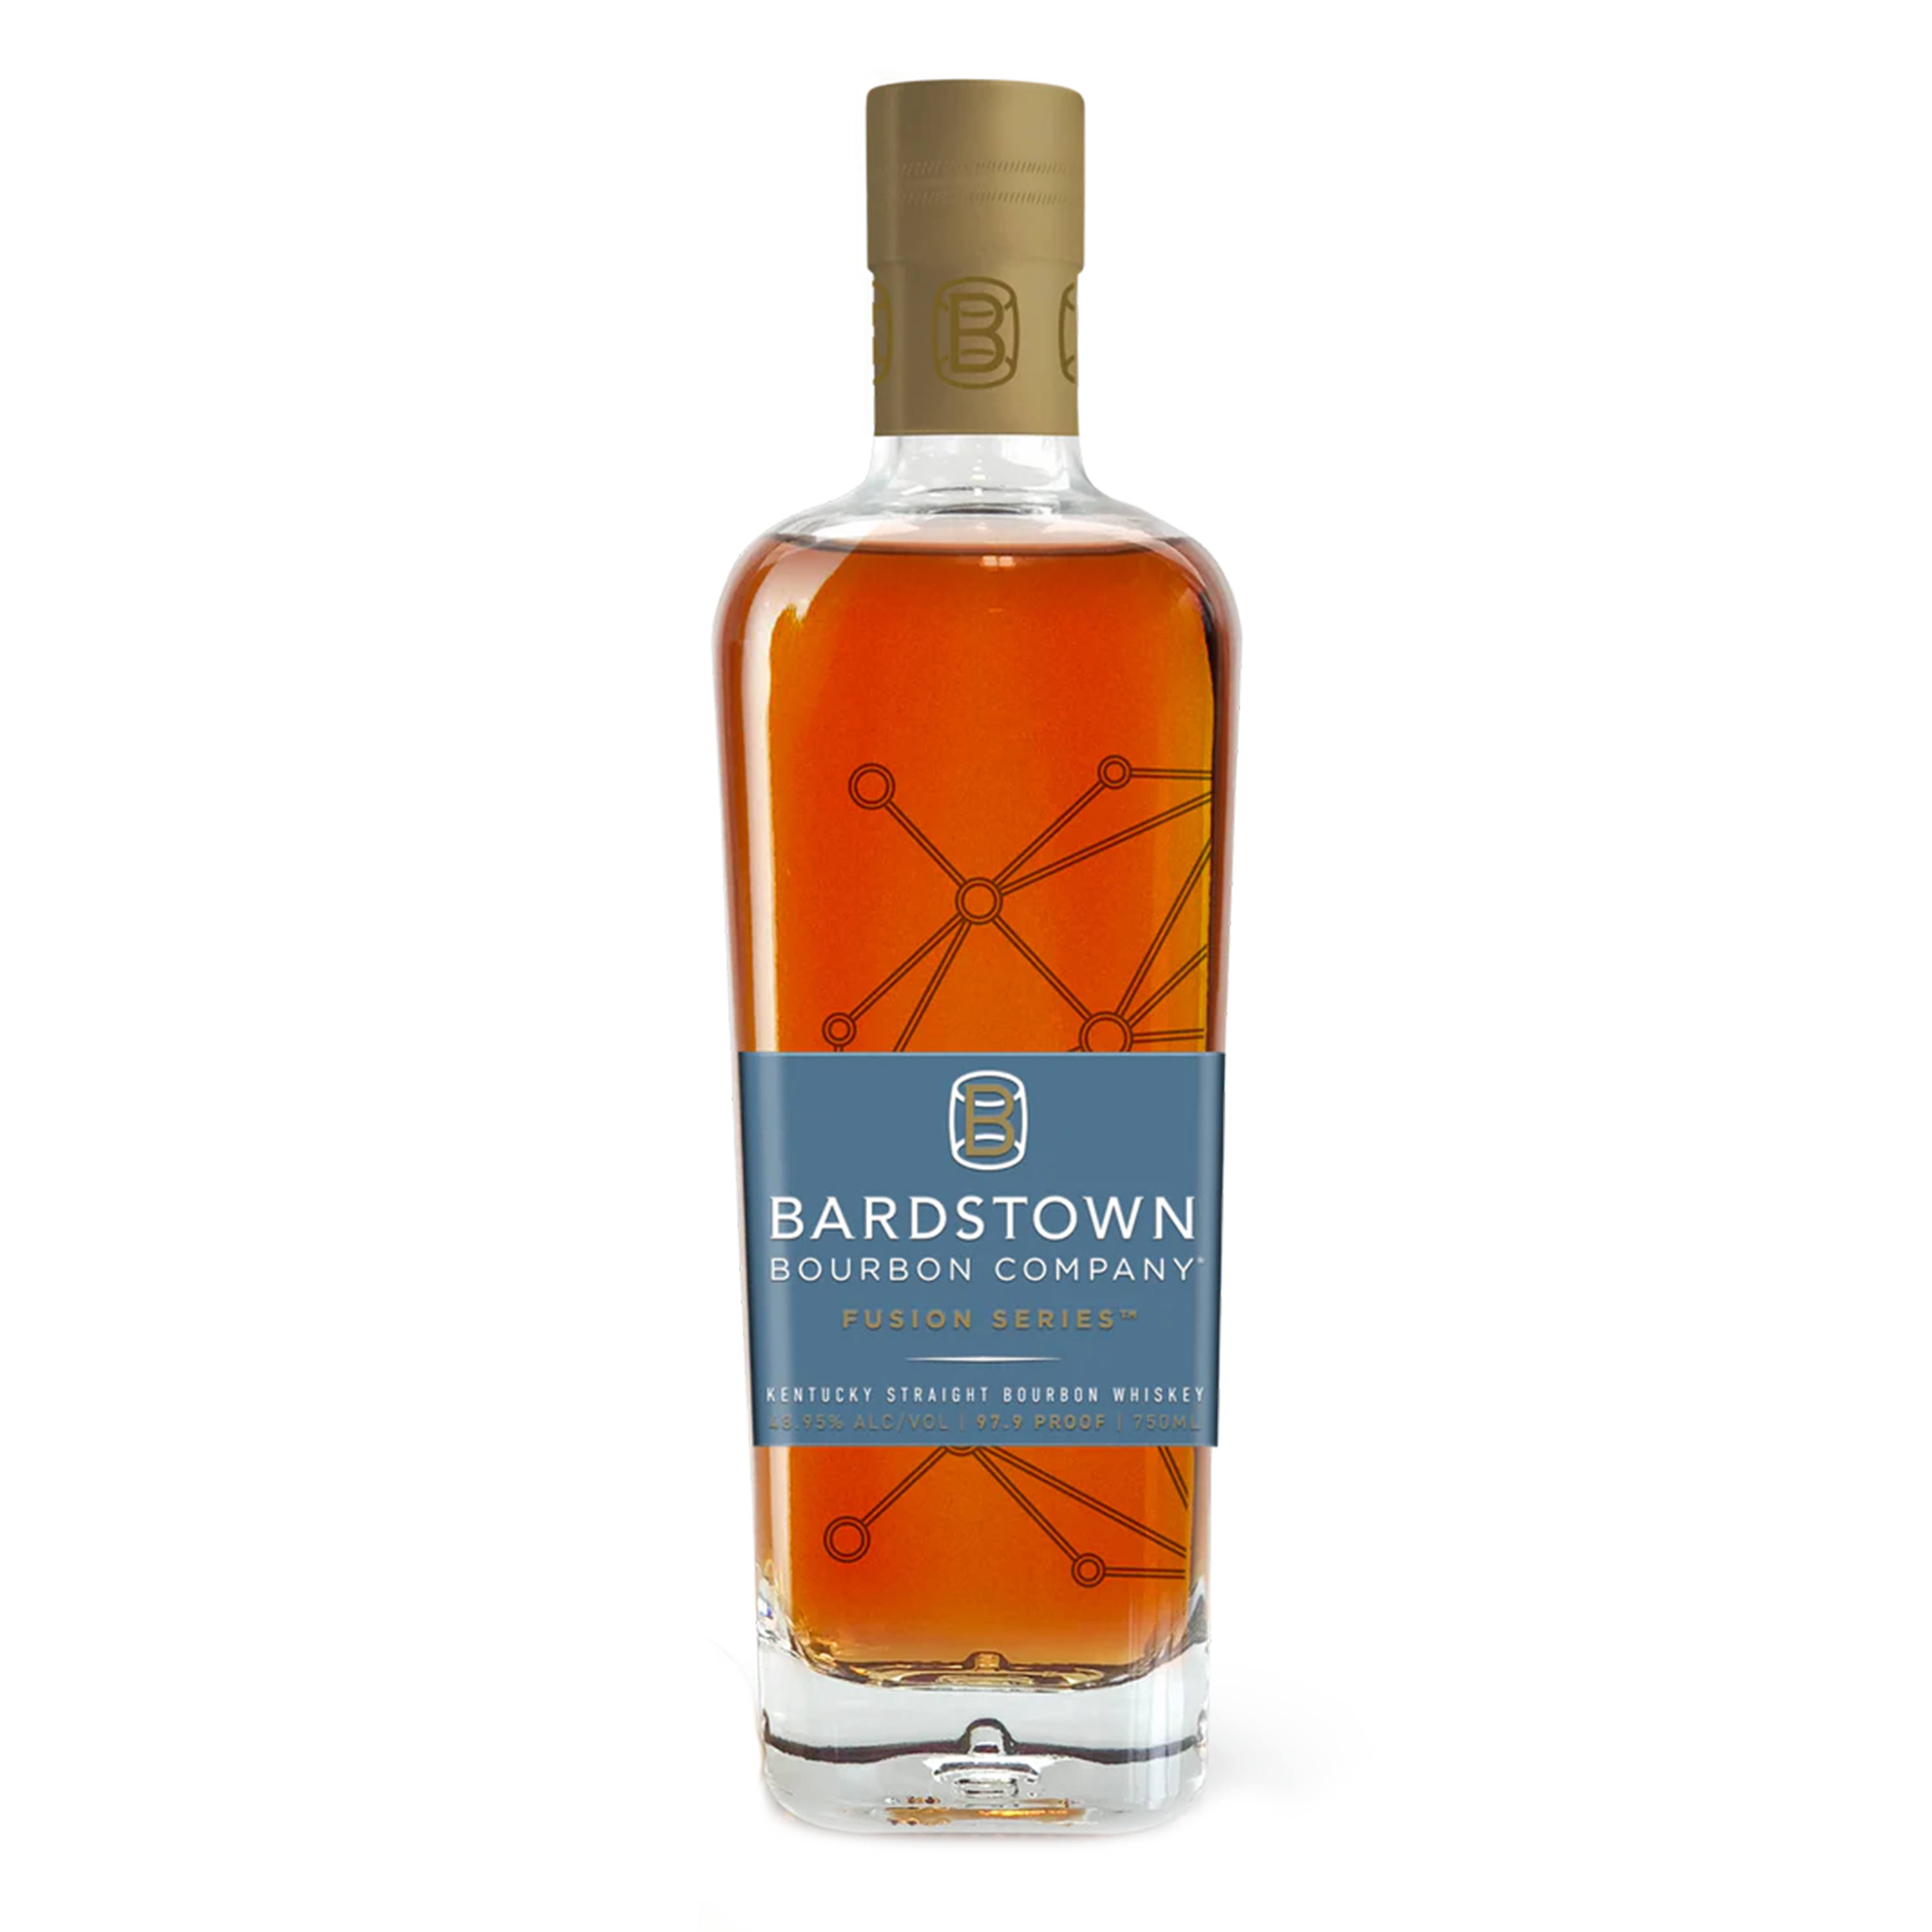 Bardstown Bourbon Company Fusion Series Whiskey, Straight Bourbon, Kentucky - 750 ml